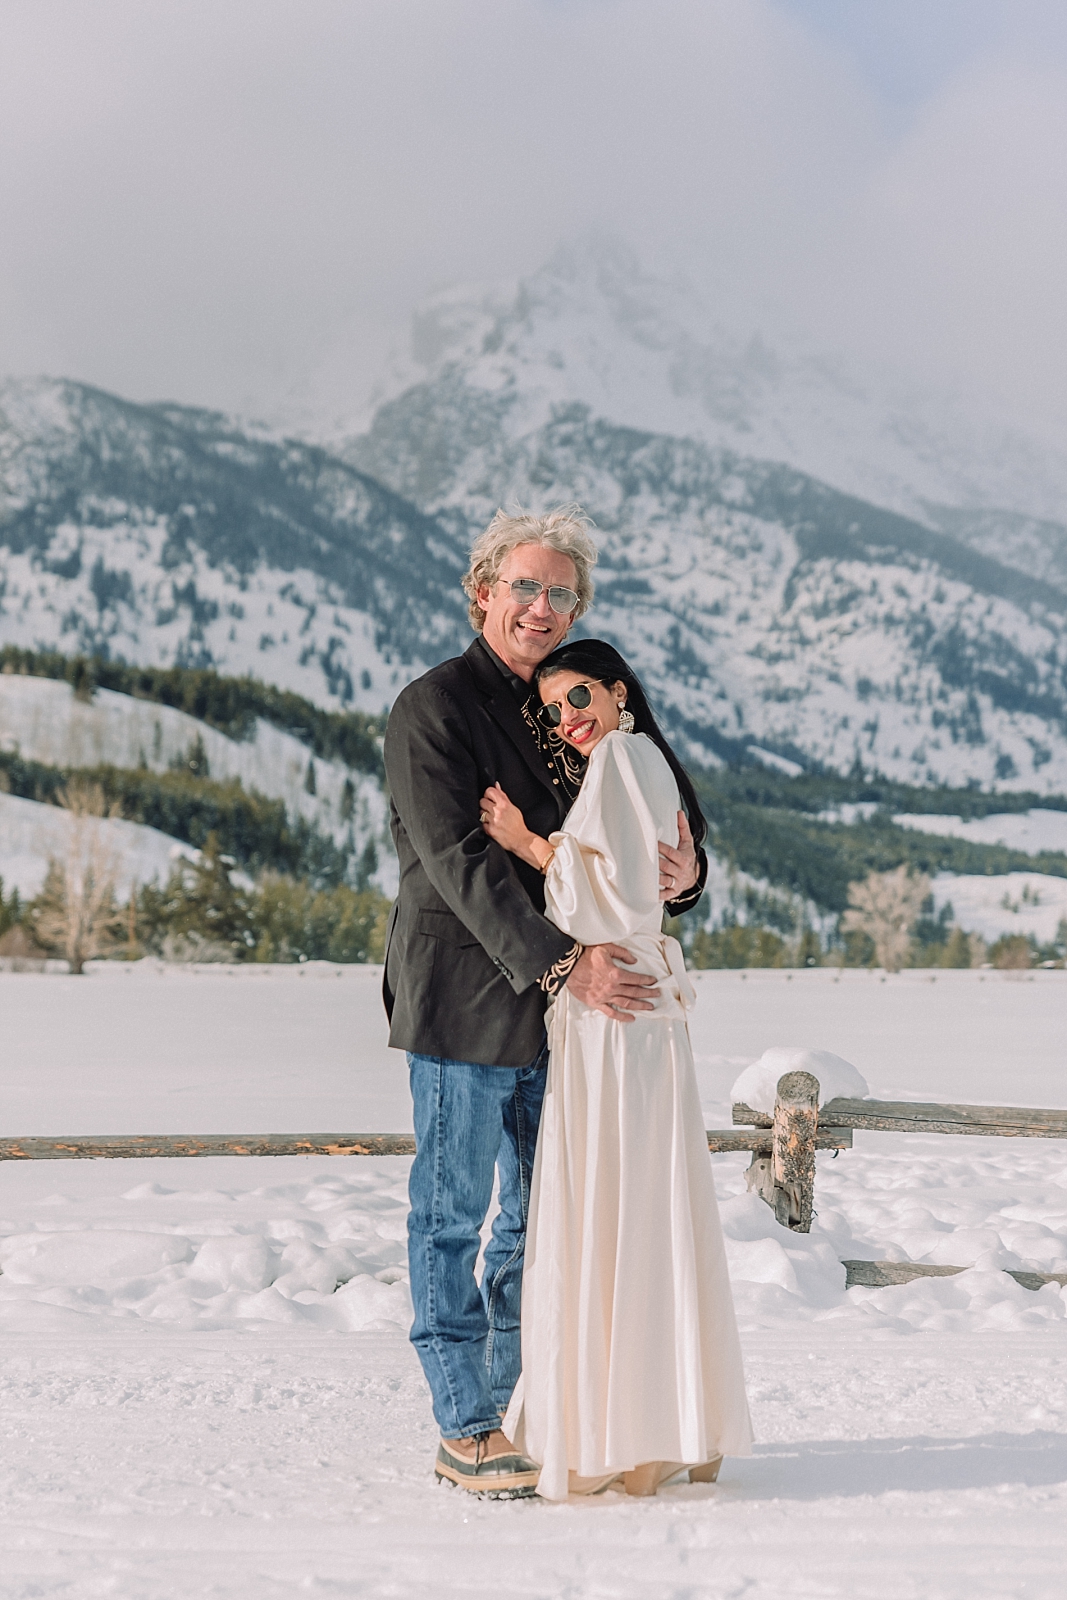 Jackson Hole Wedding Photographer, Wyoming Winter Wedding, elopeemnt